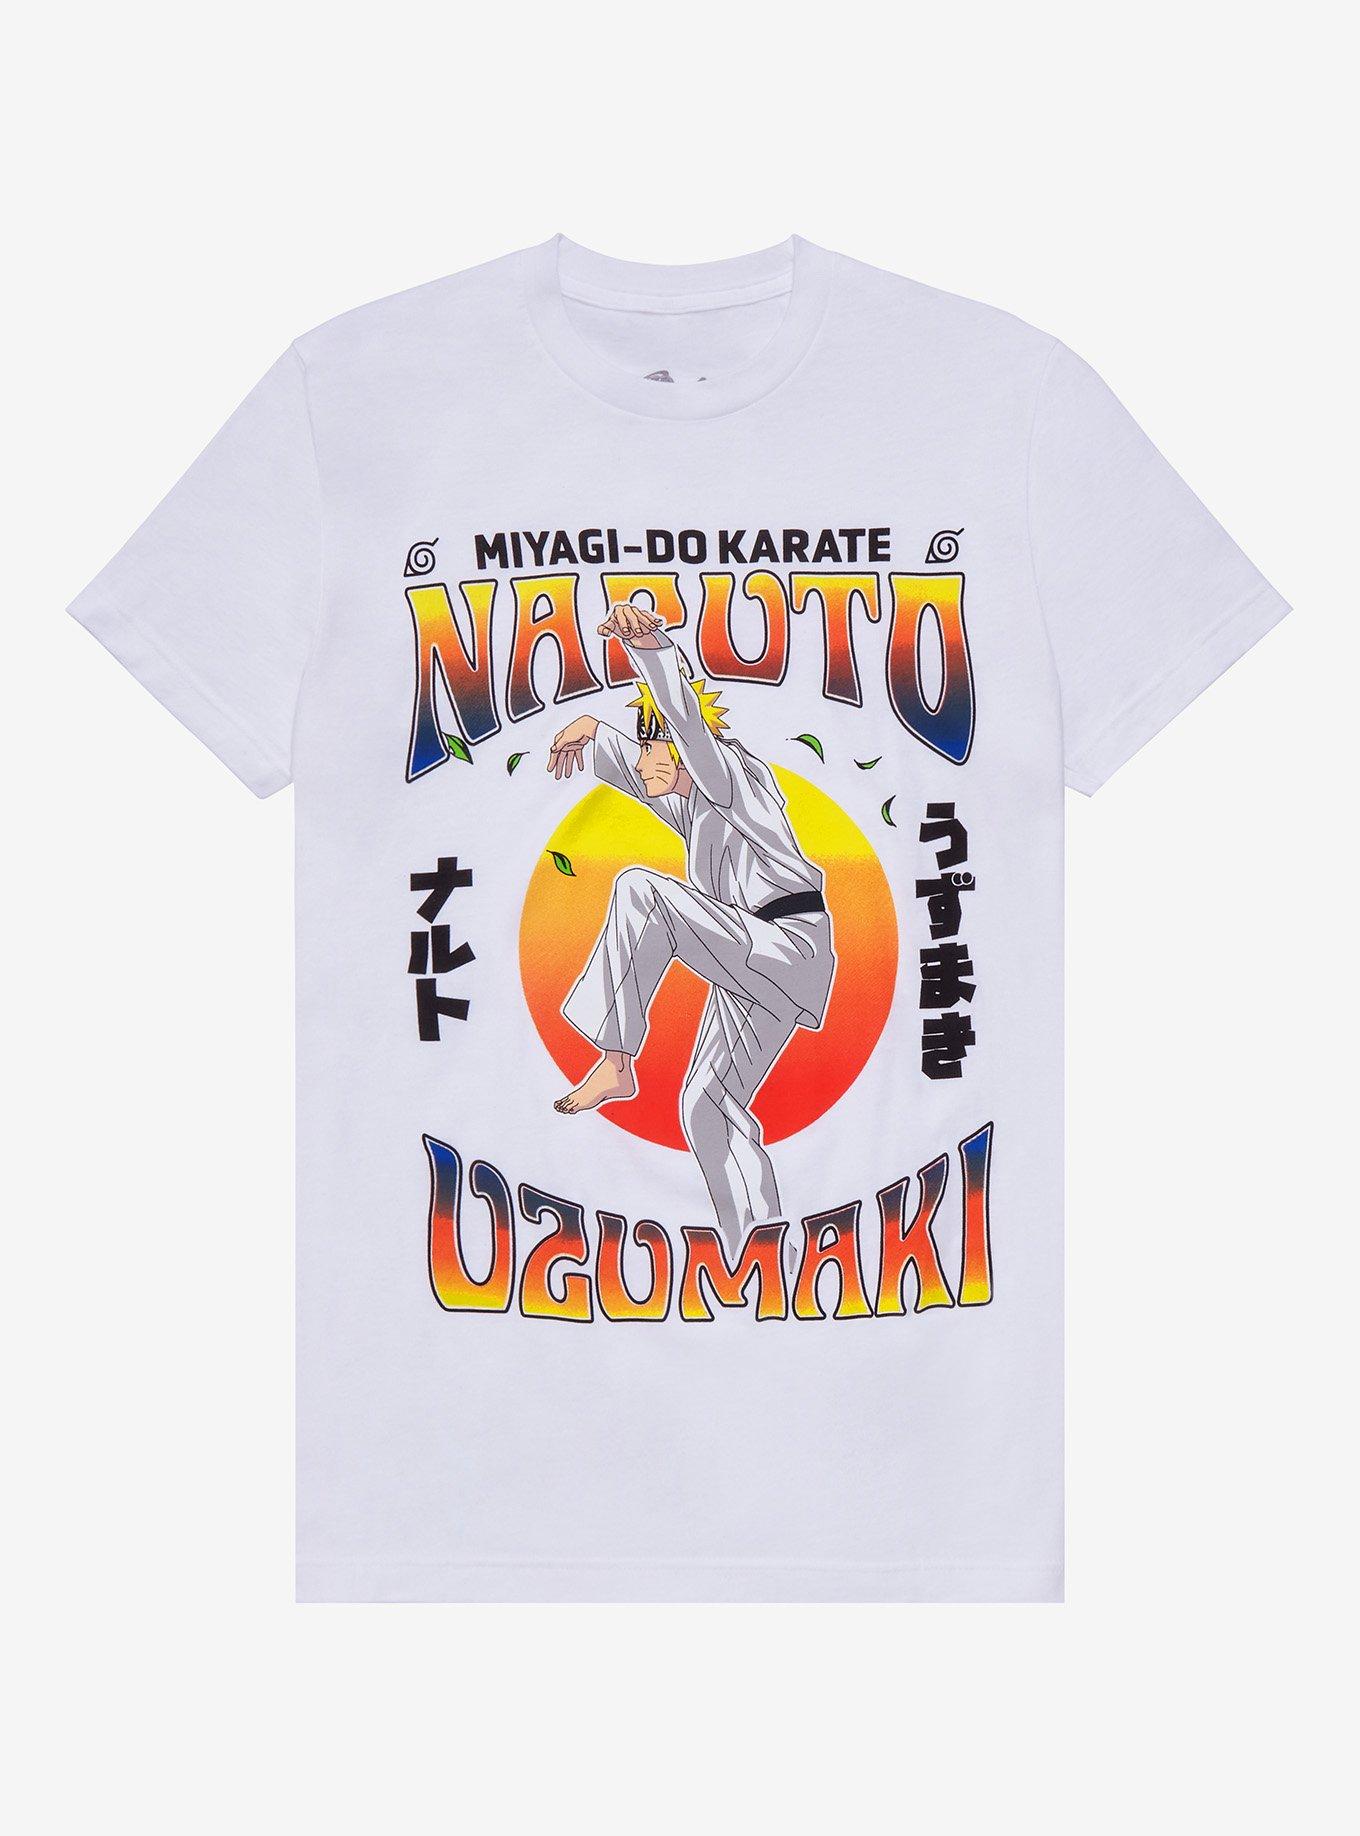 Naruto Youth Girls Naruto Uzumaki Blue Crop Top Shirt New XS-XL